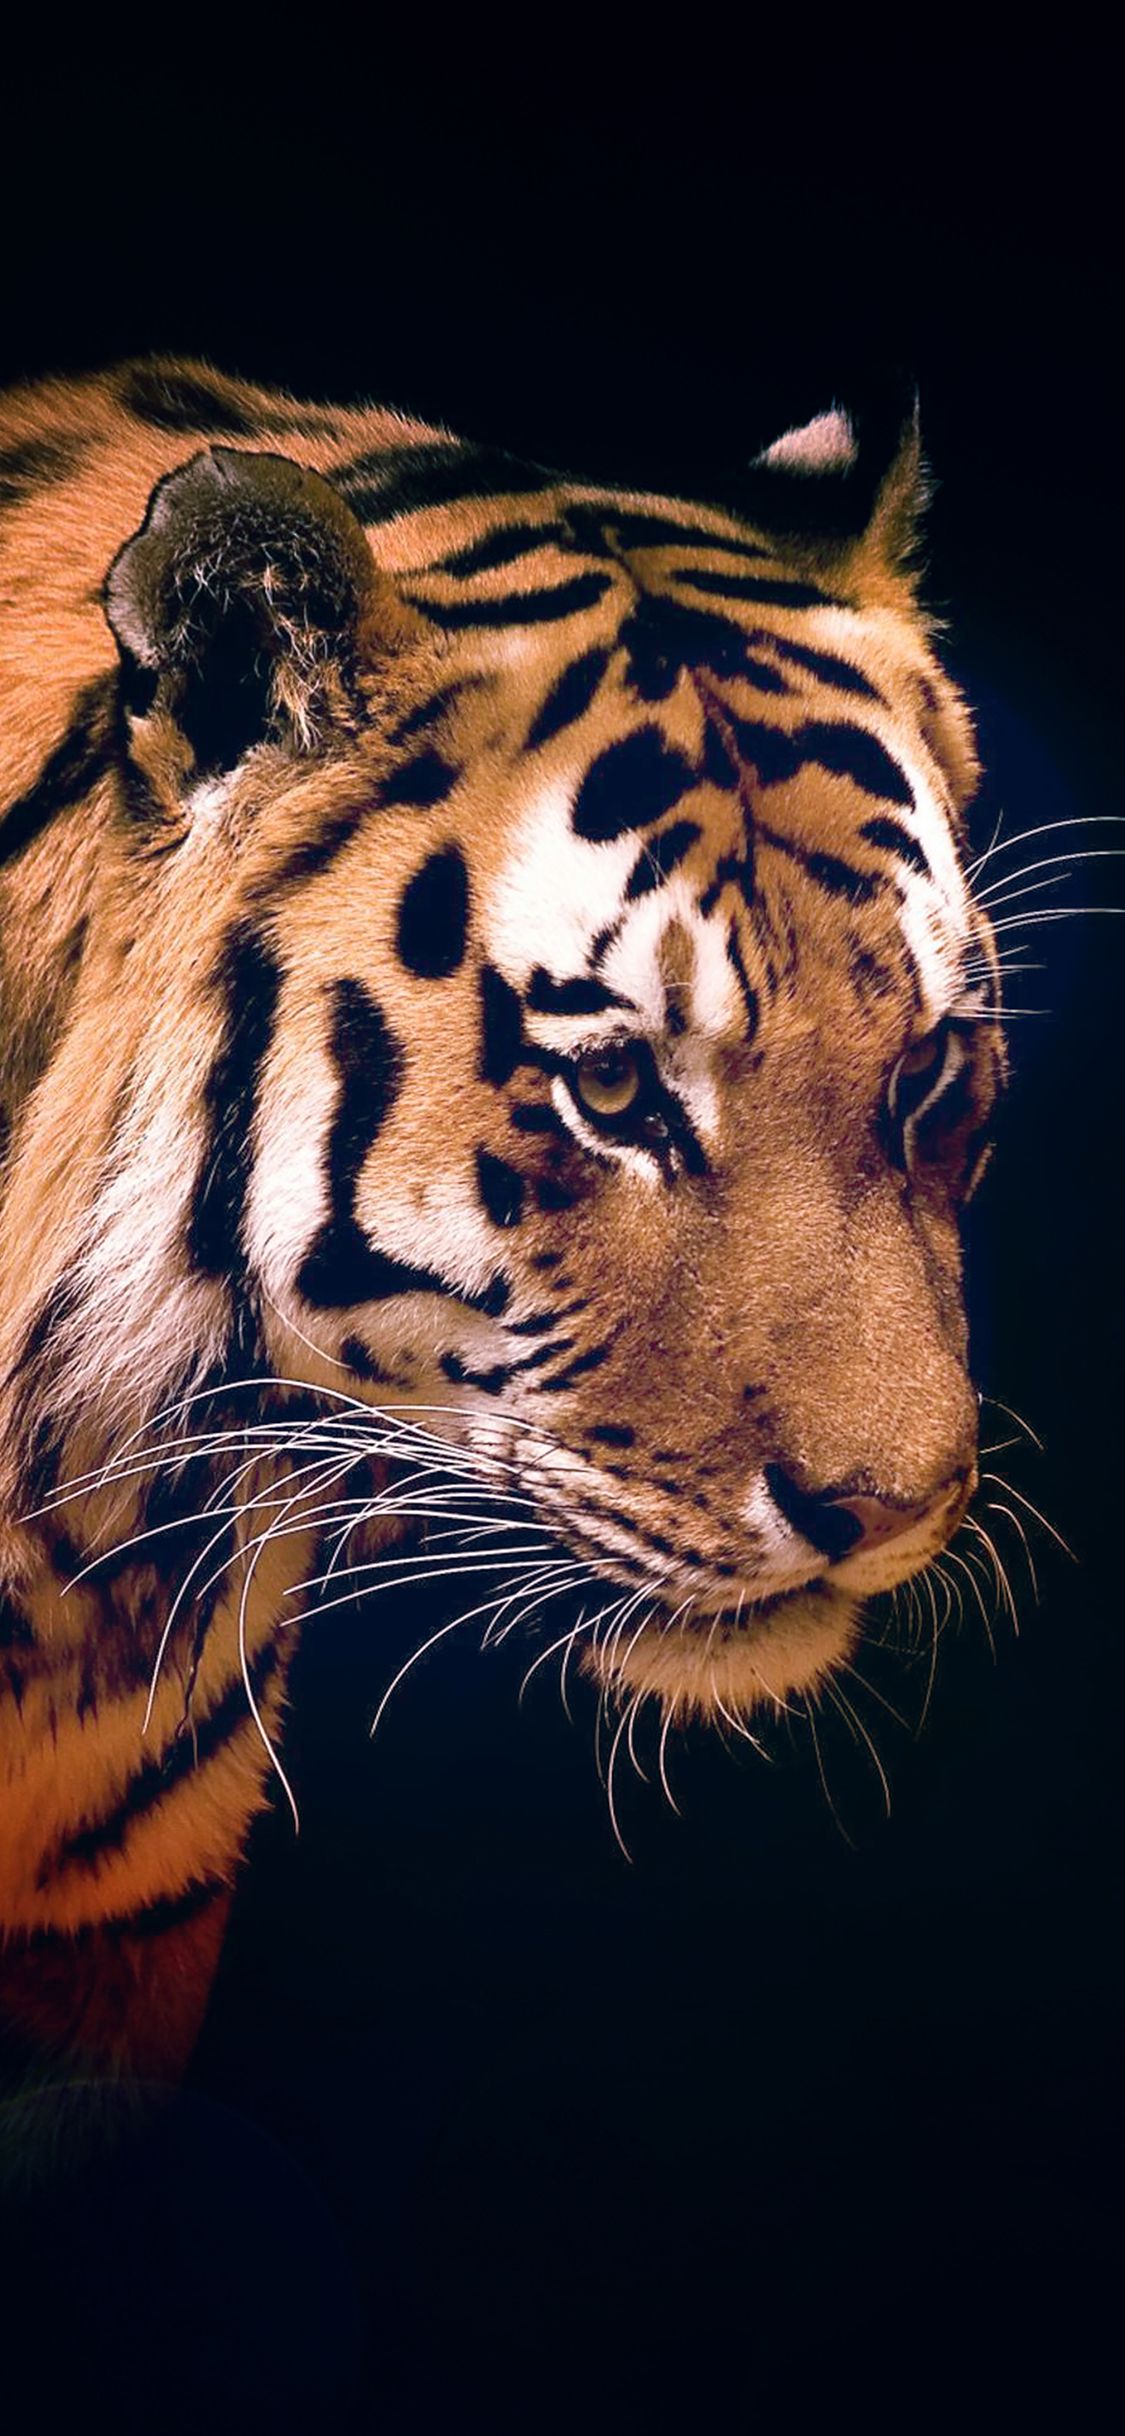 iPhone X wallpaper. tiger dark animal